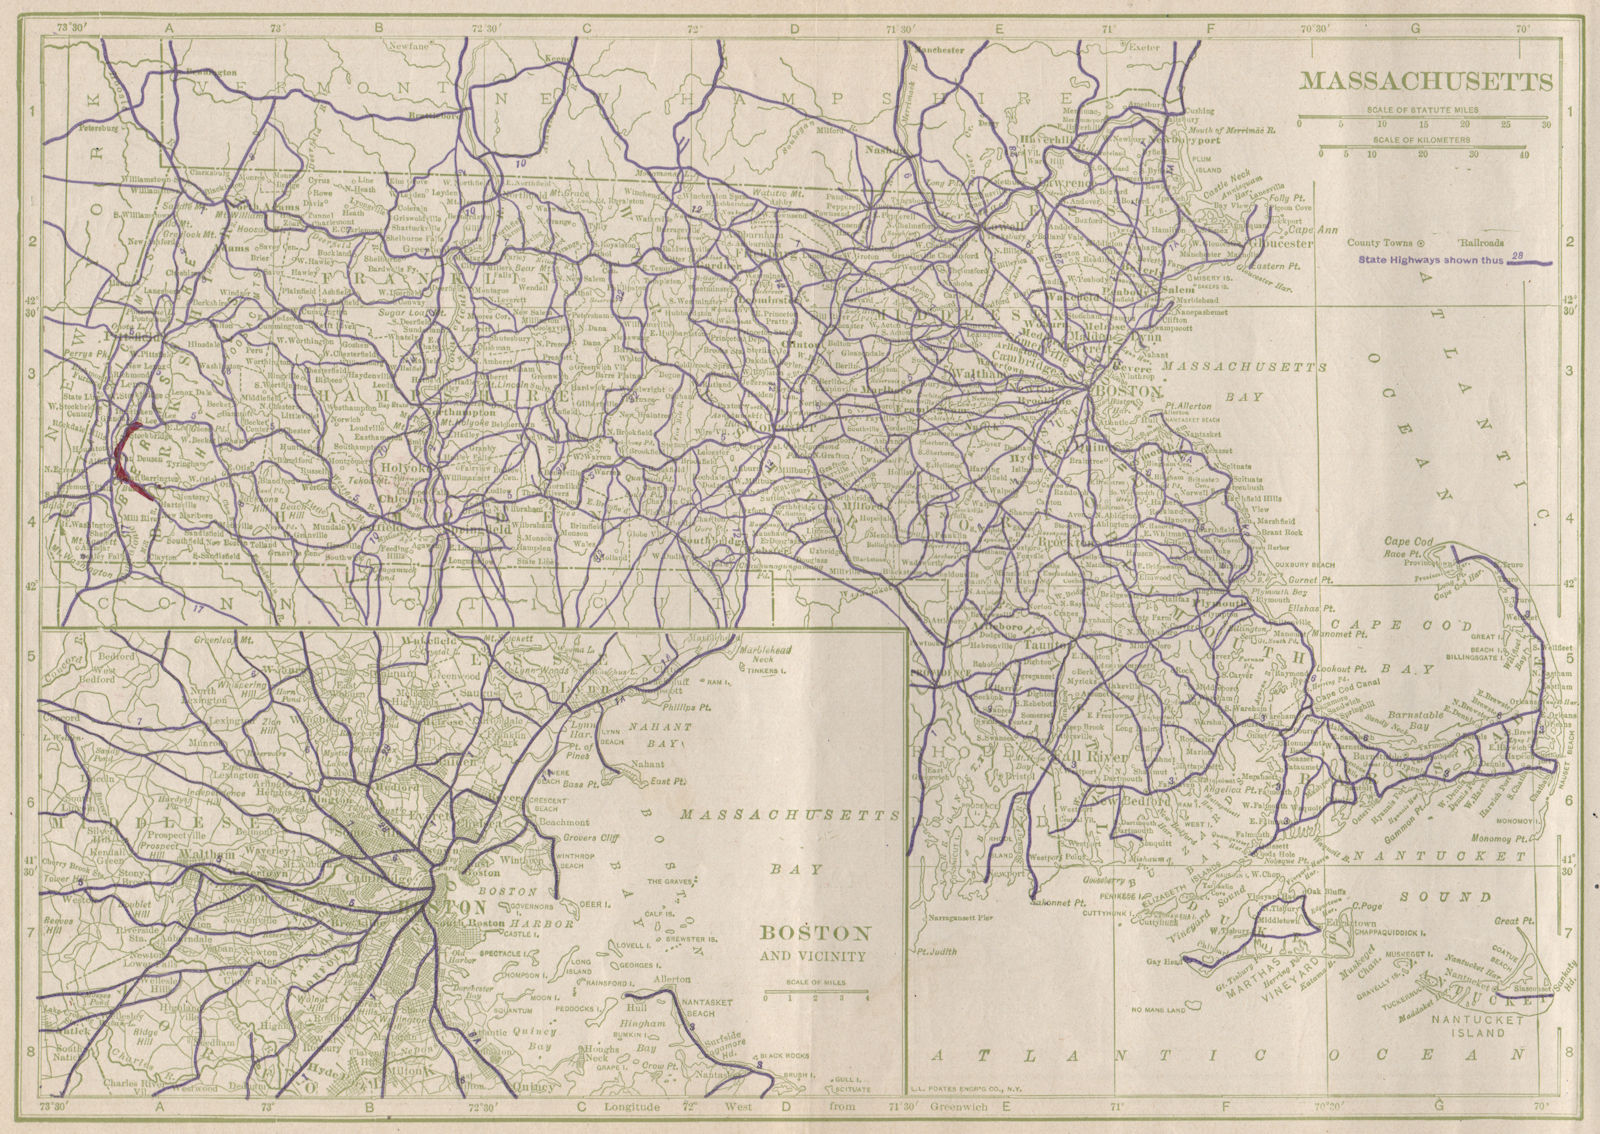 Associate Product Massachusetts & Boston area State Highways. POATES 1925 old vintage map chart